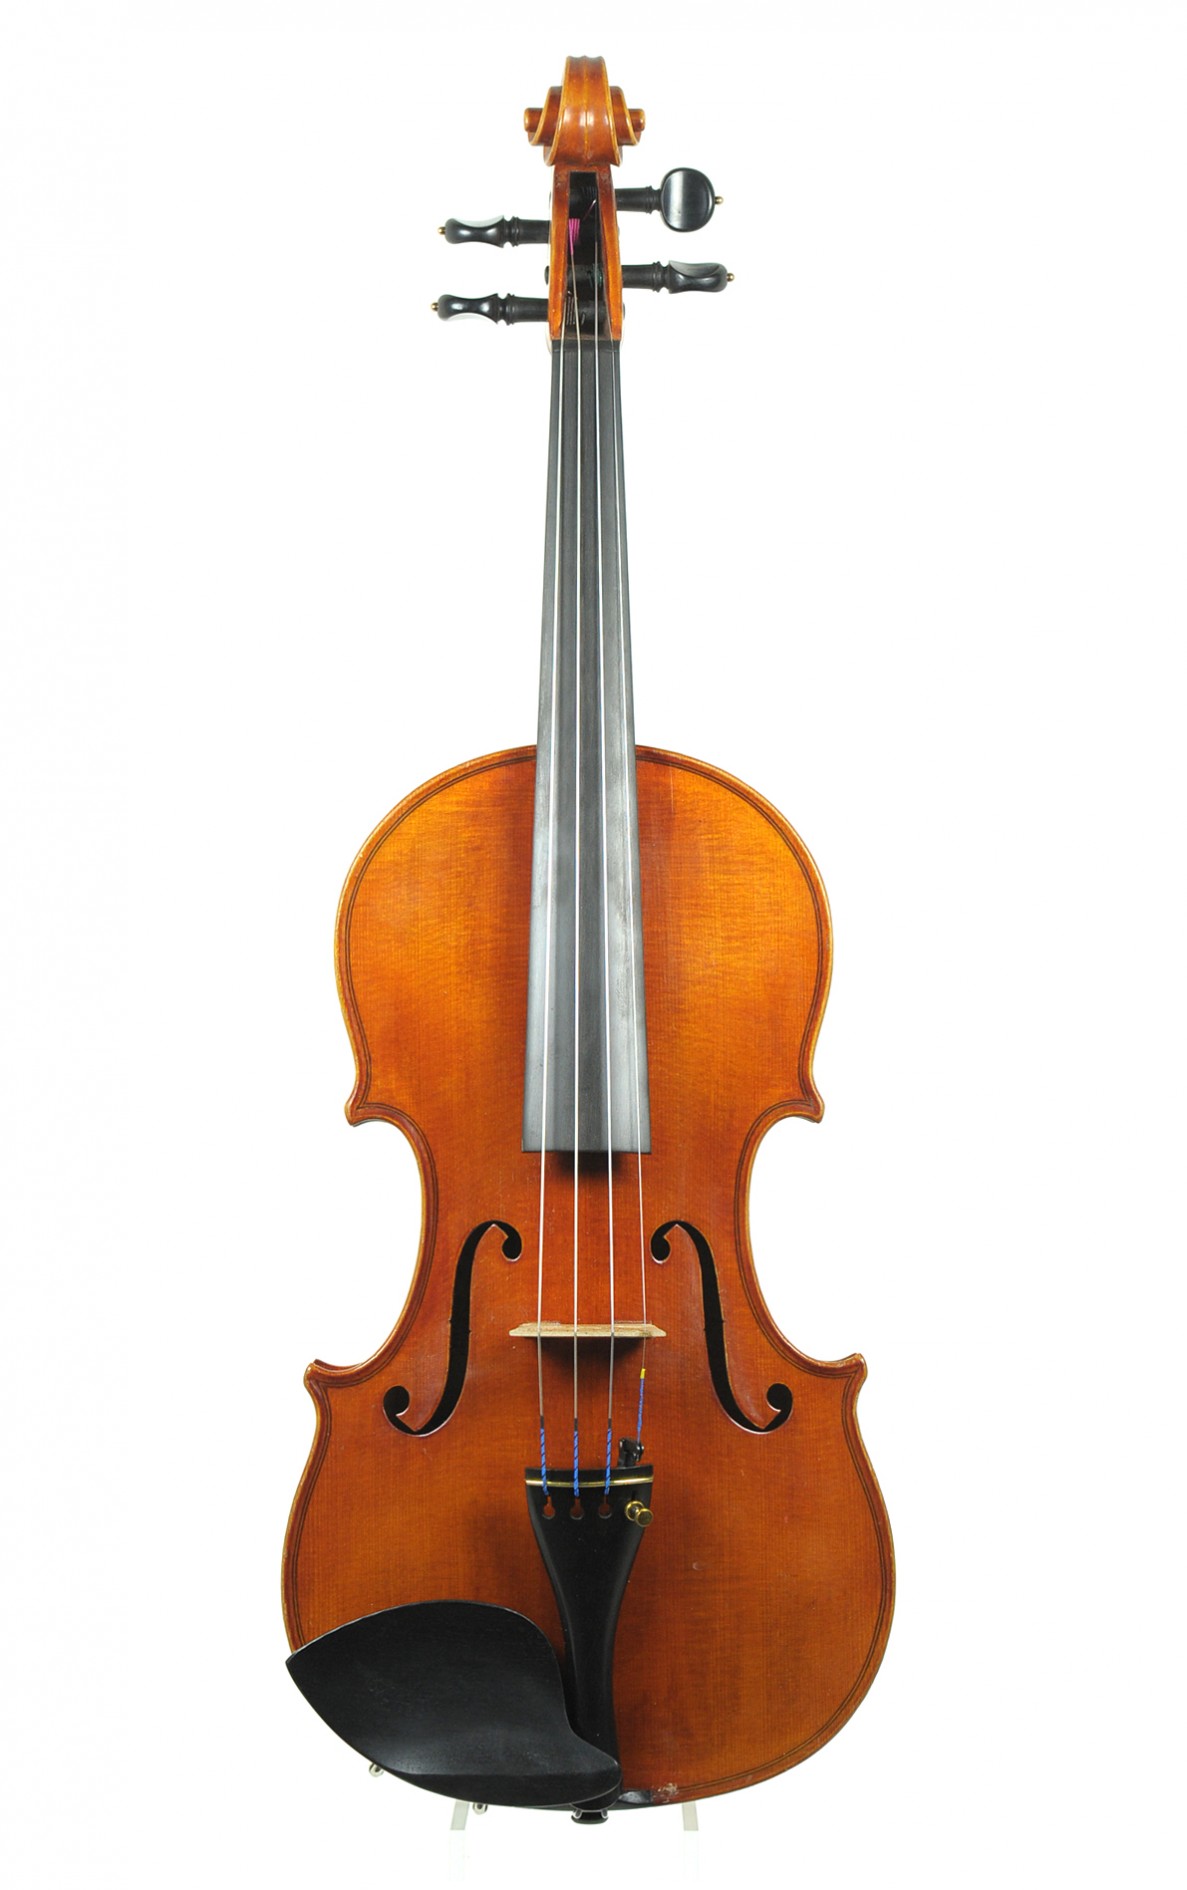 C. A. Götz, violin approx. 1990 - top